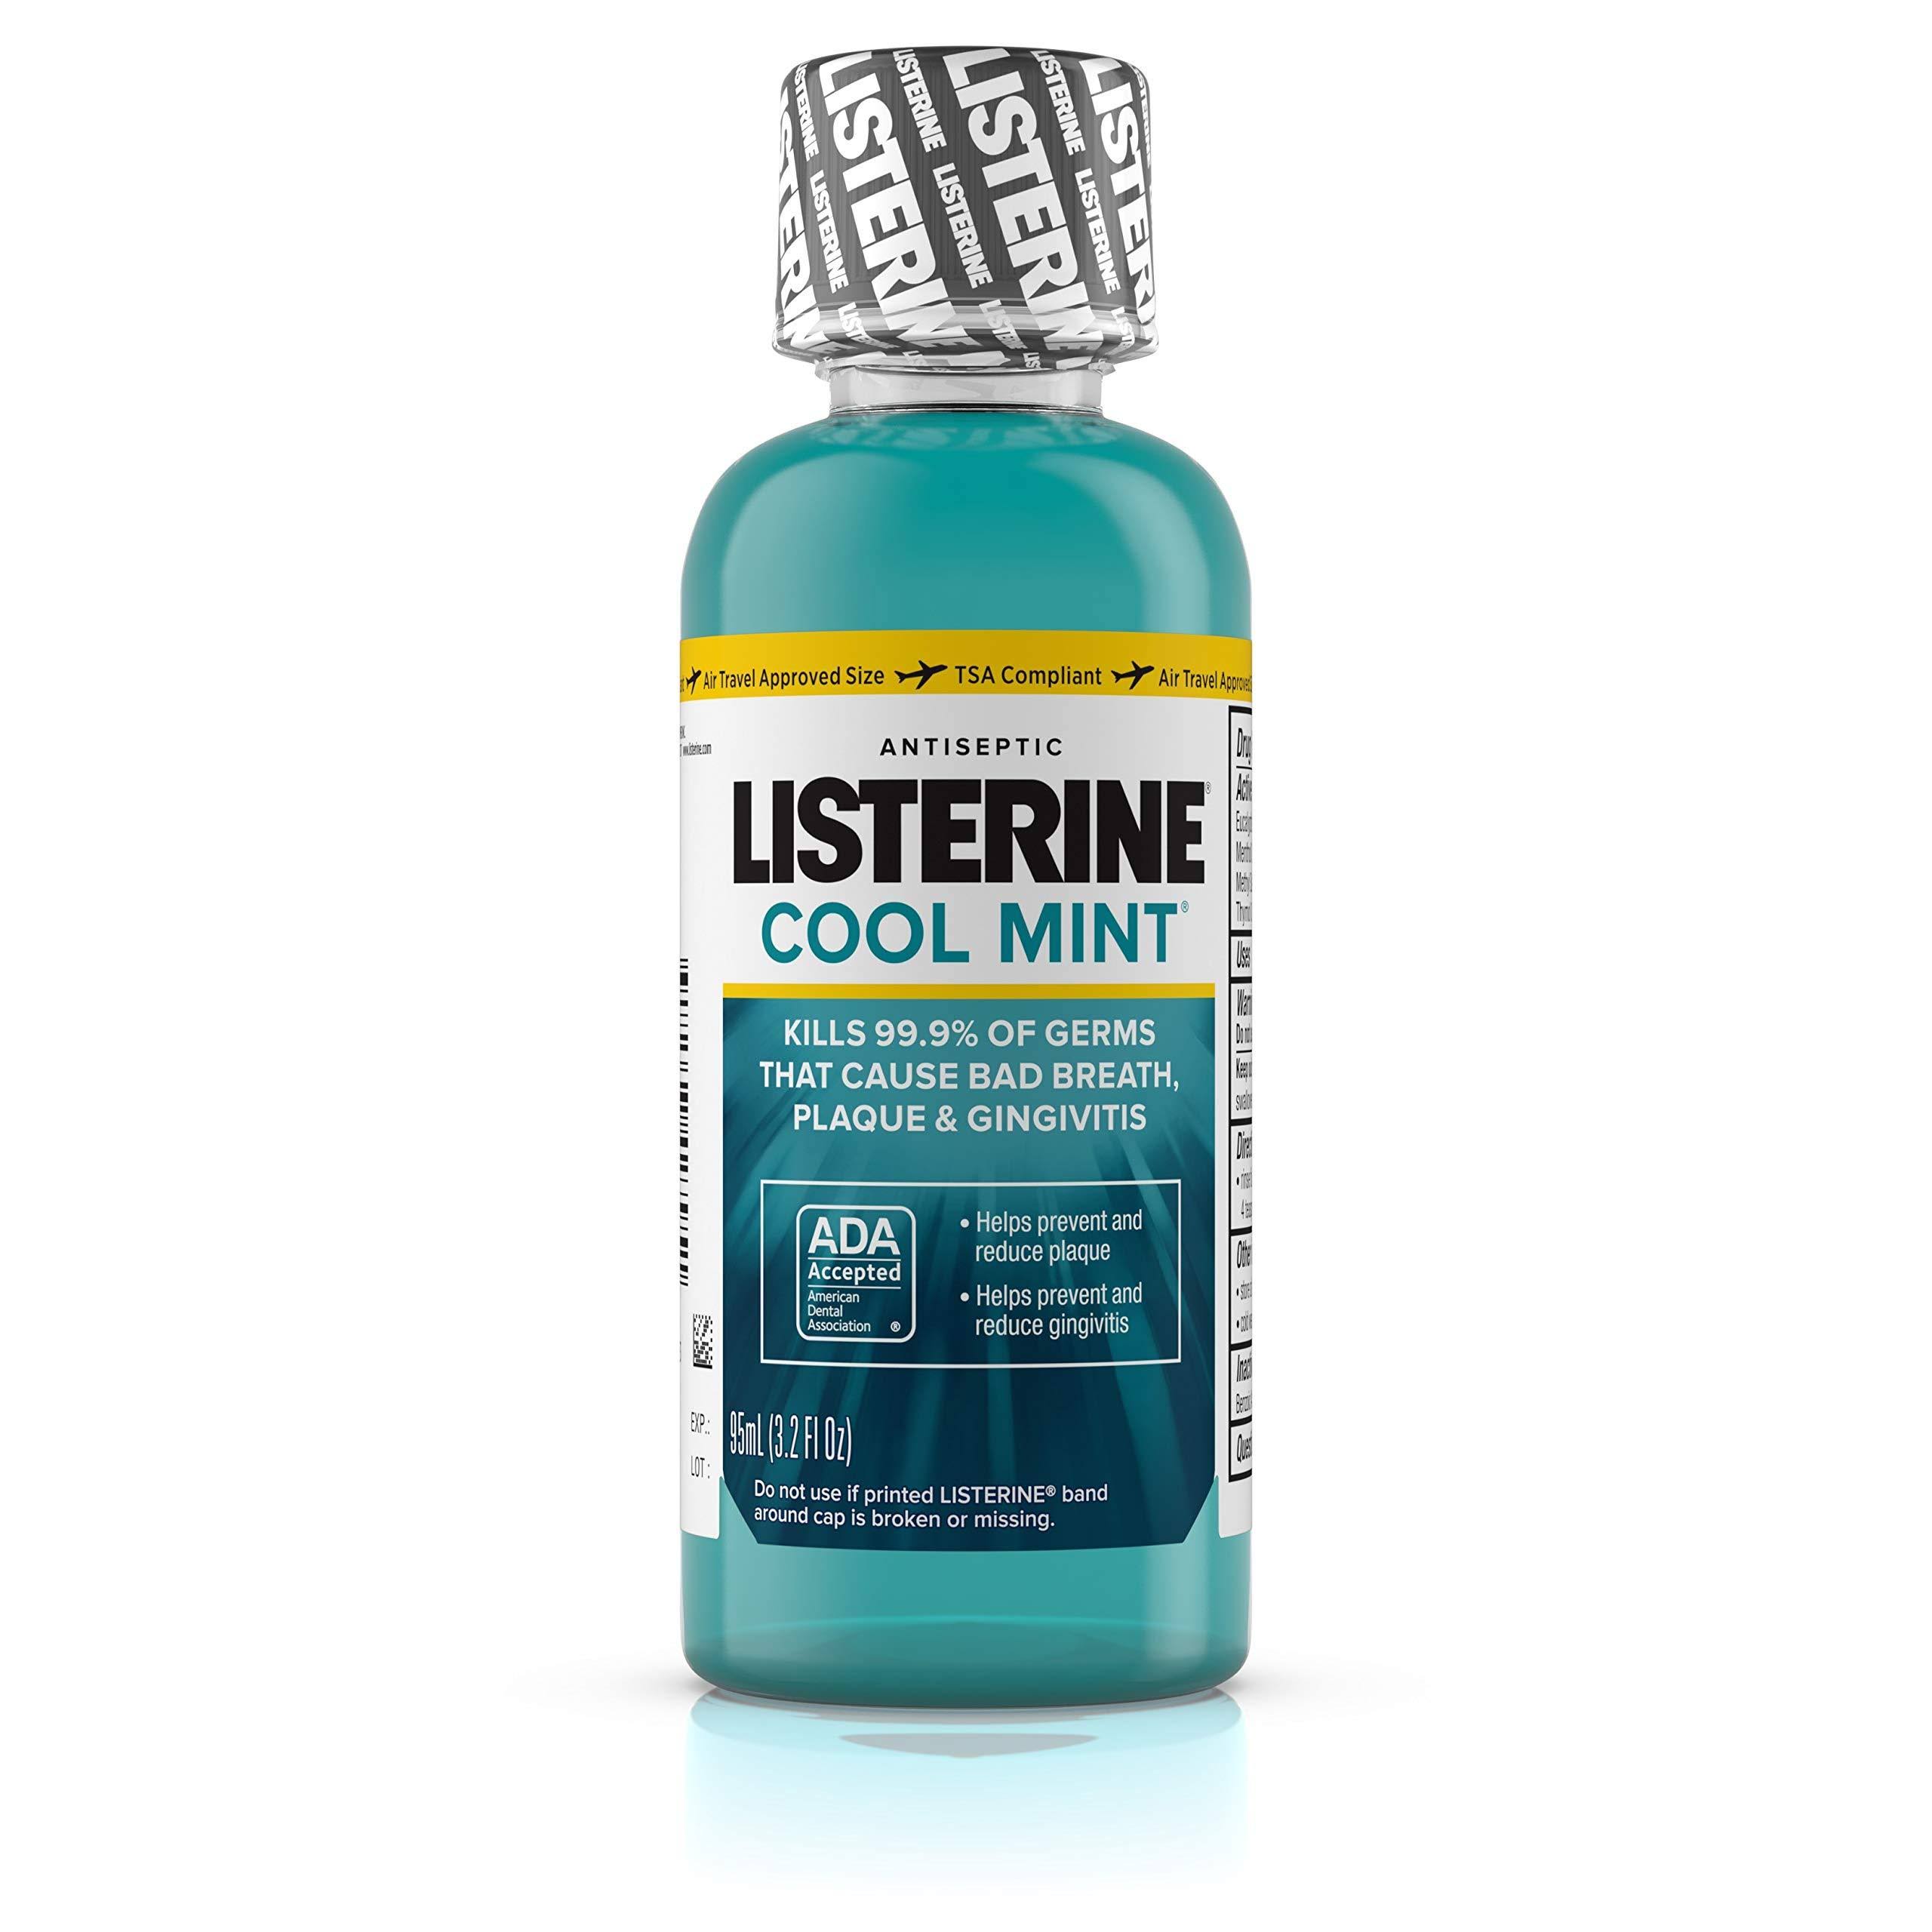 Listerine Antiseptic Adult Mouthwash - Cool Mint, 3.2 fl oz